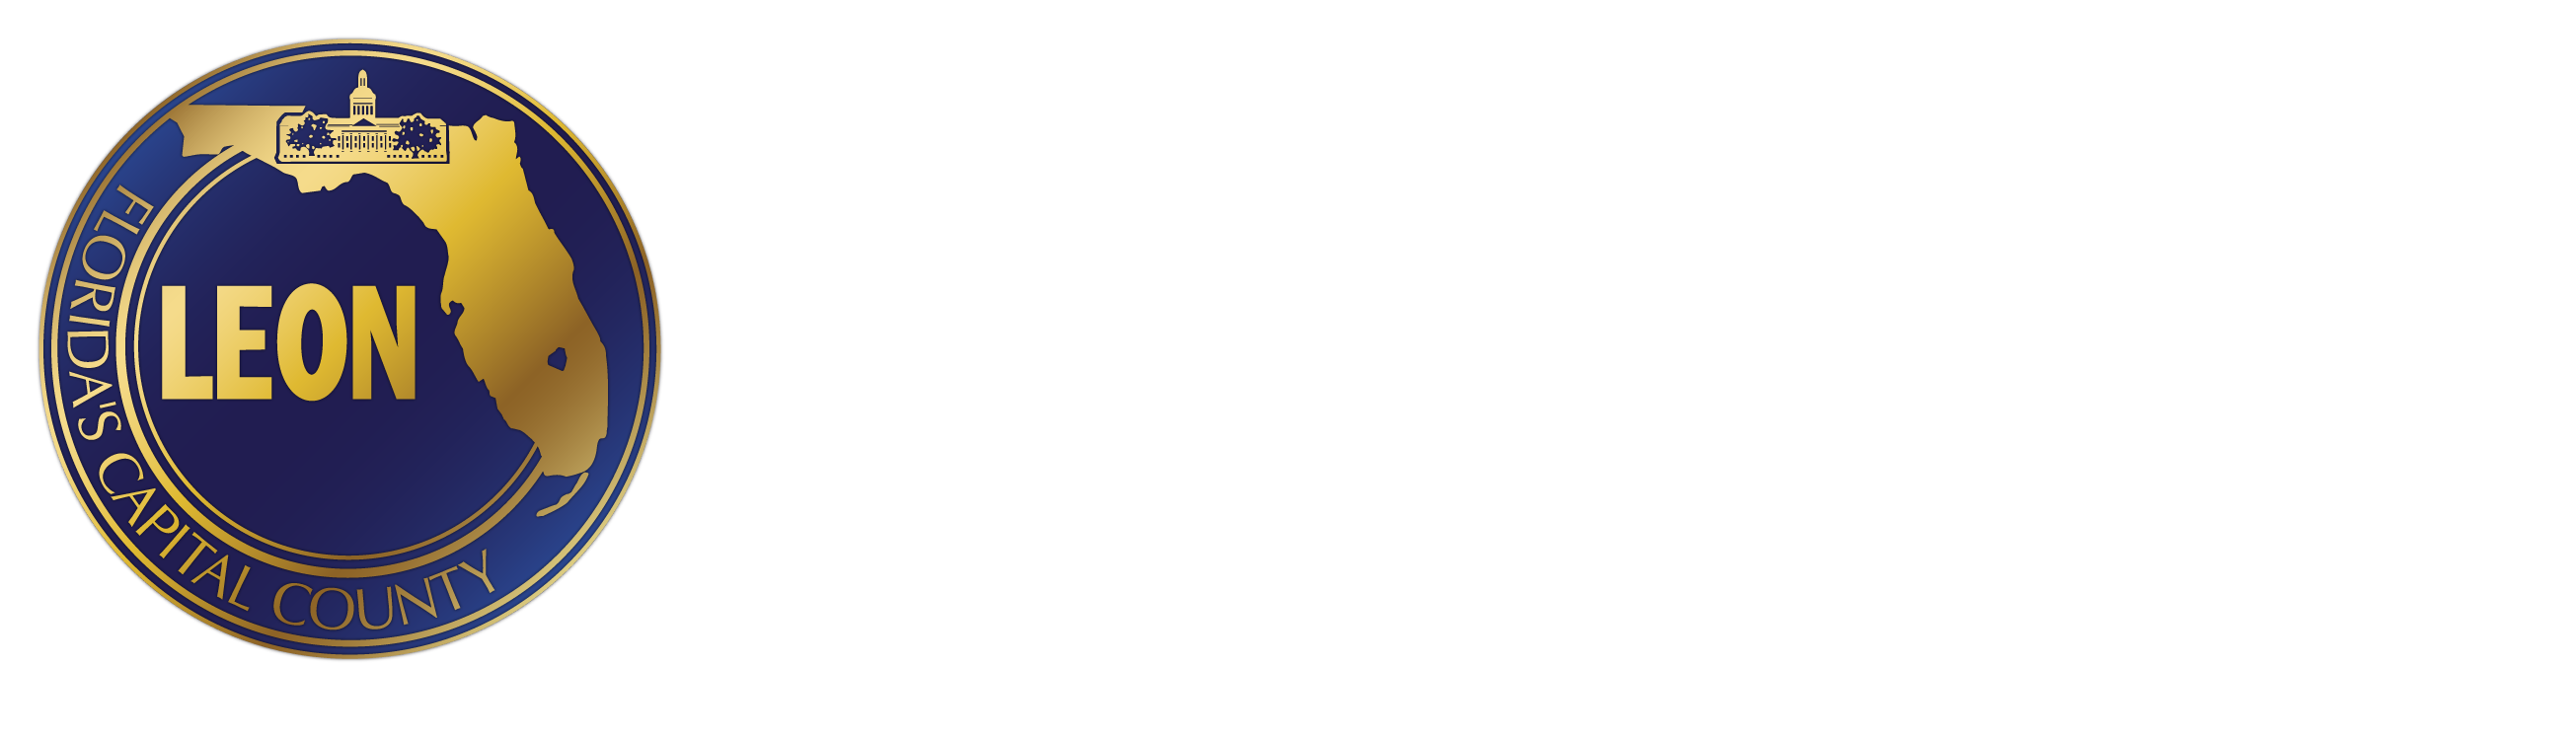 Leon County Government logo